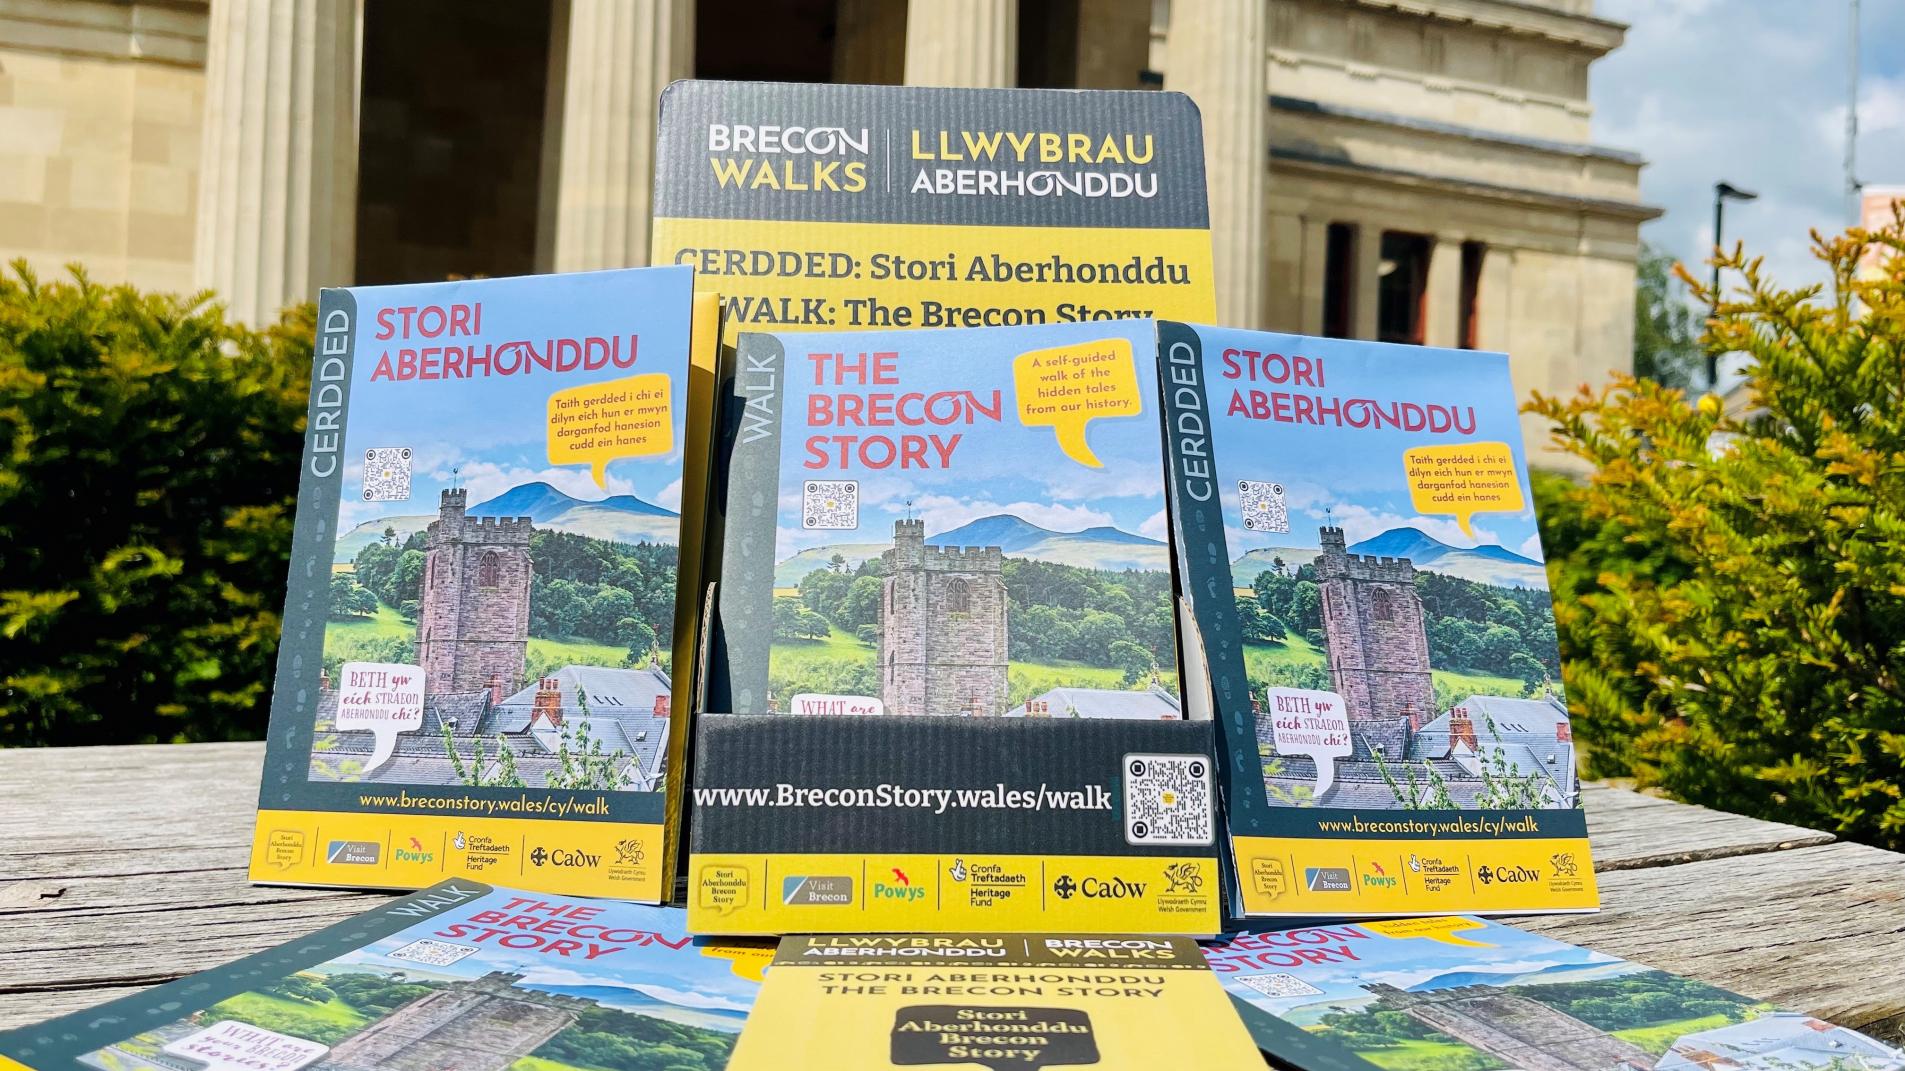 WALK: The Brecon Story guided history walk around Brecon